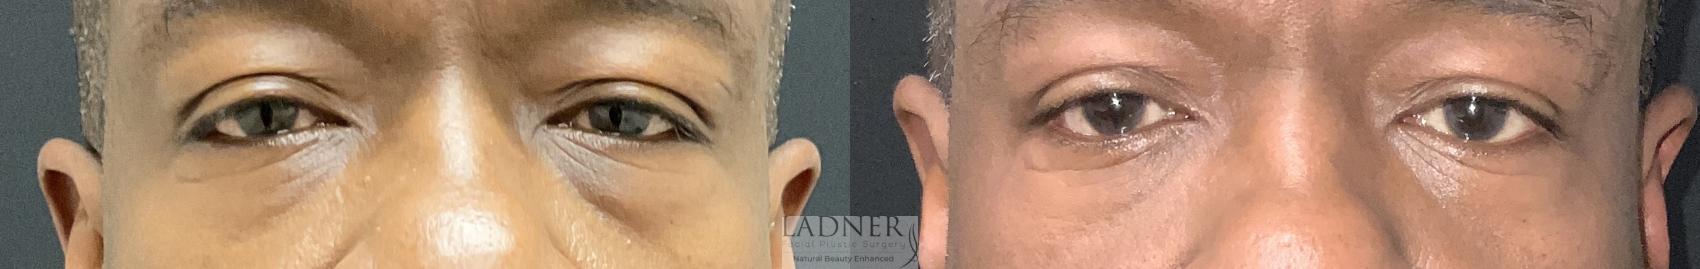 Eyelid Surgery (blepharoplasty) Case 235 Before & After Front | Denver, CO | Ladner Facial Plastic Surgery